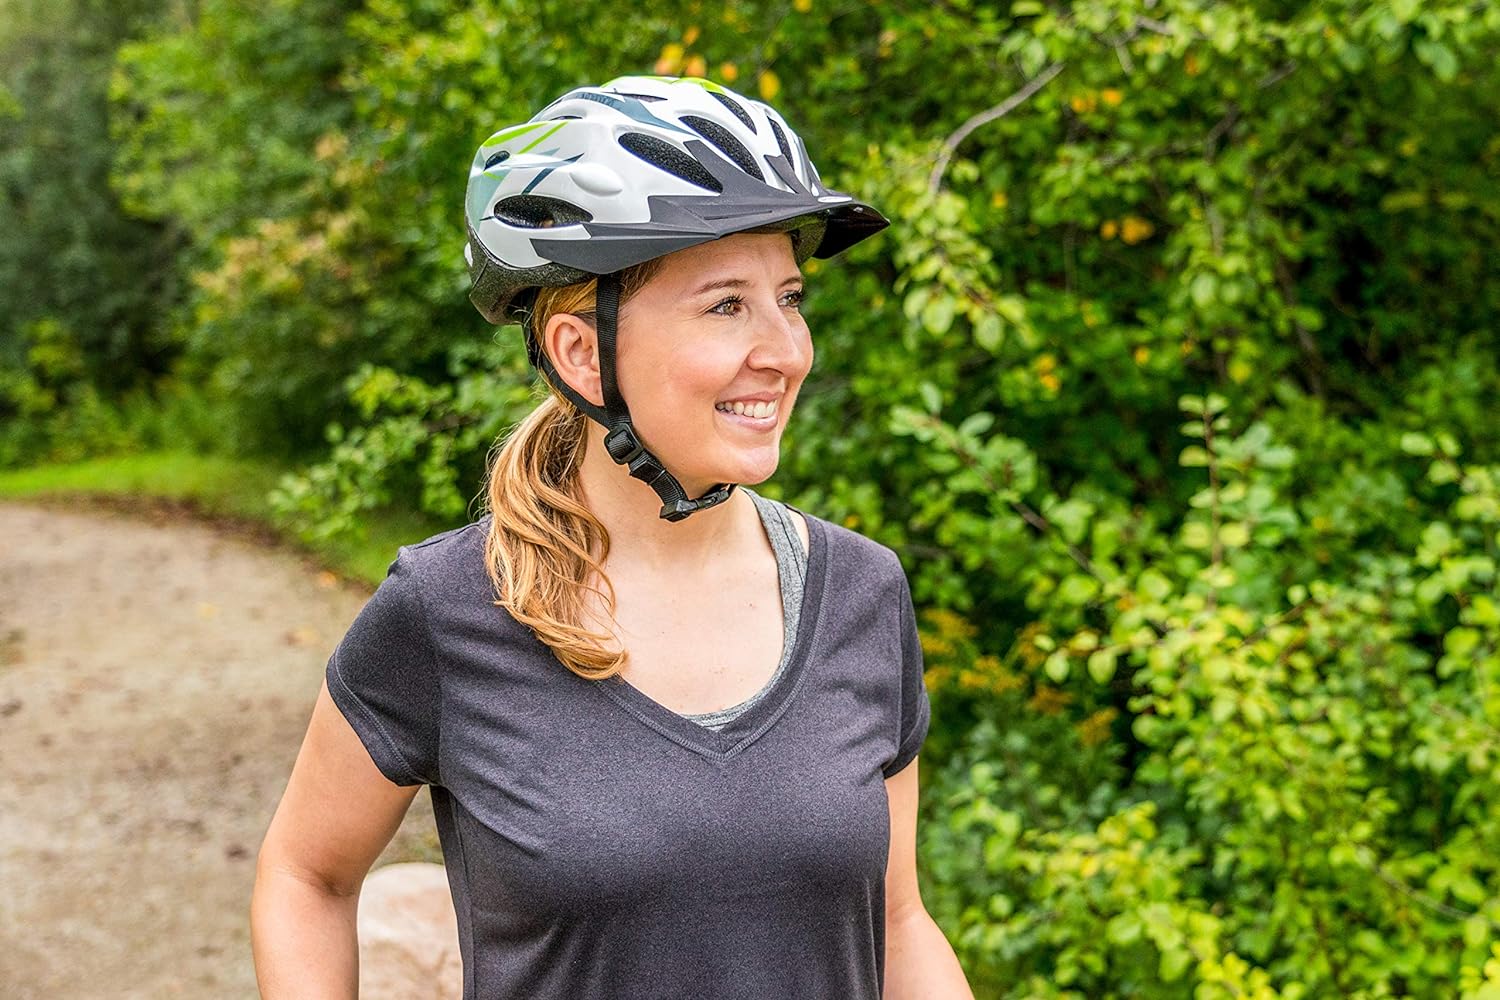 Schwinn Traveler Bike Helmet, Adult and Youth Sizes White/Green